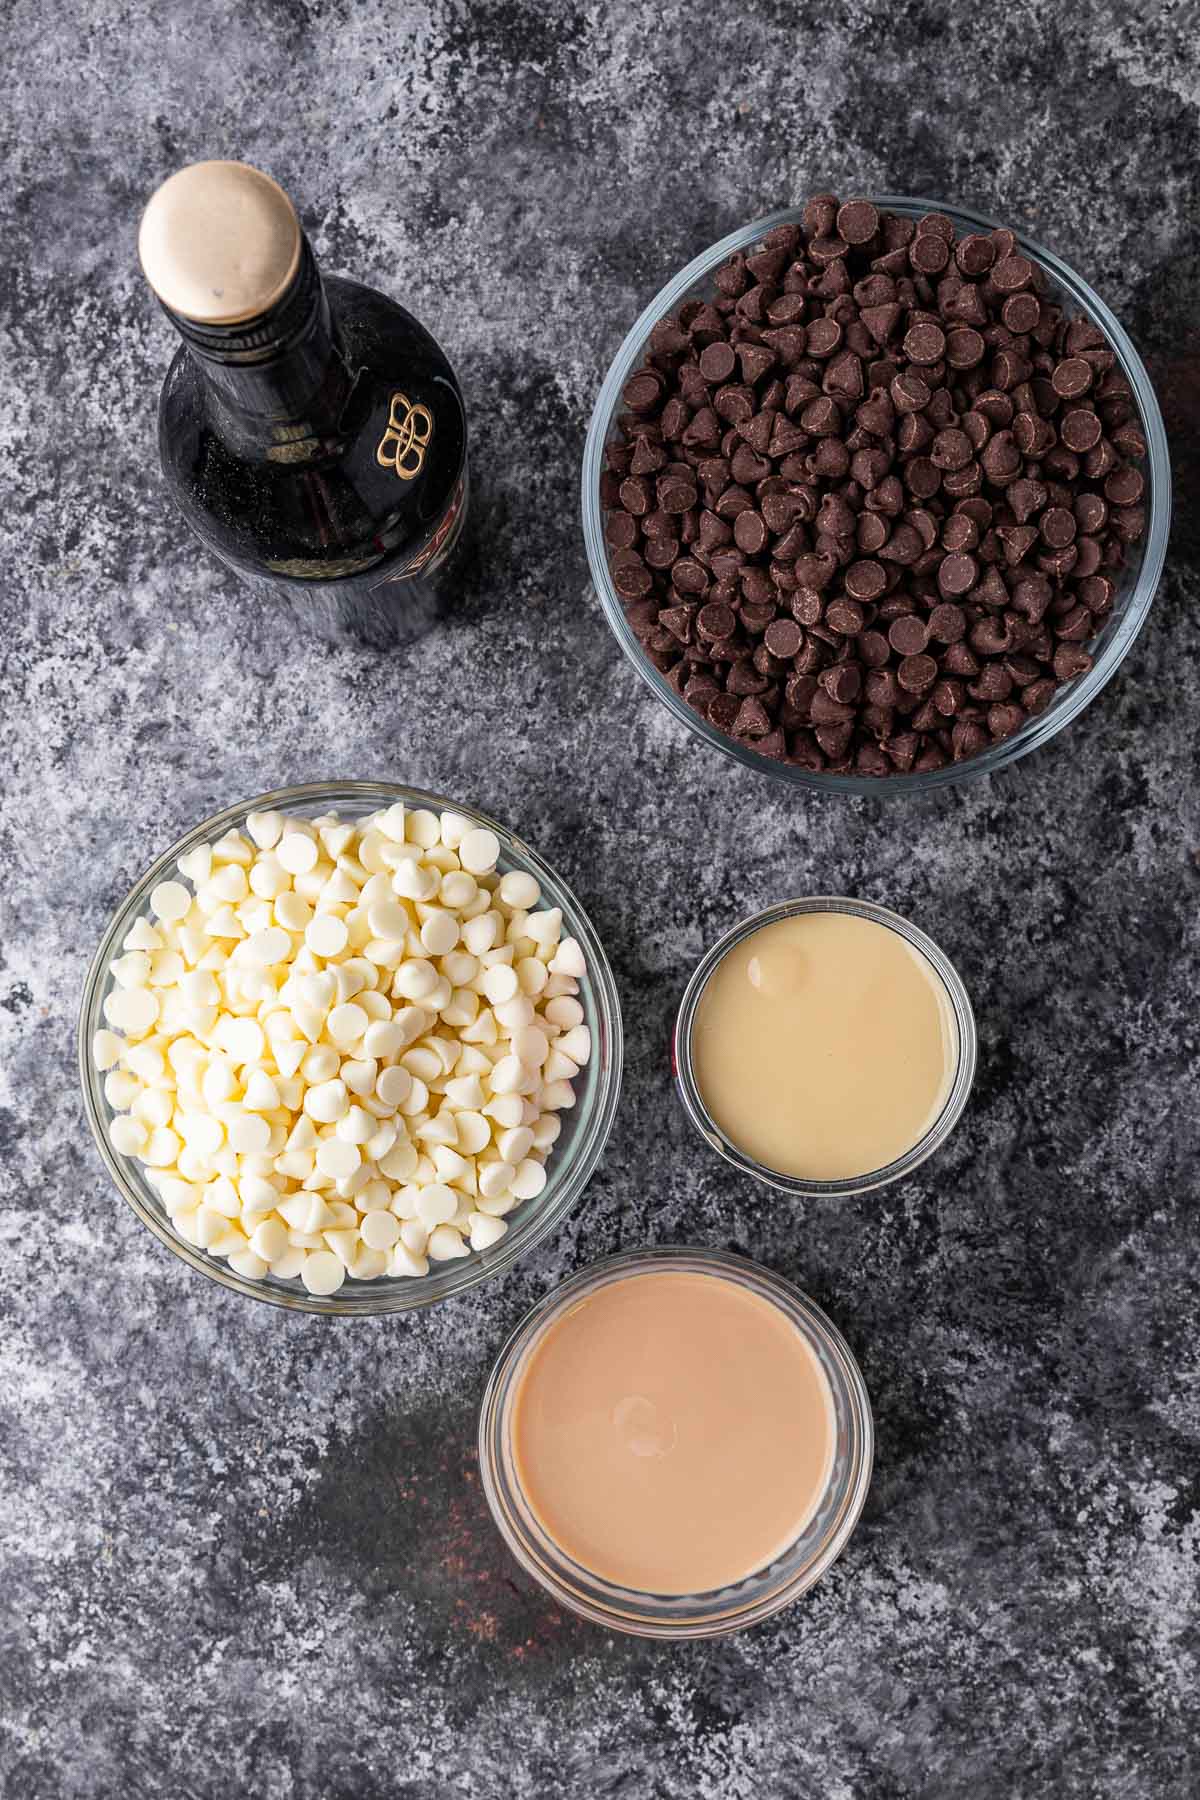 Irish Cream Chocolate Fudge individual ingredients.